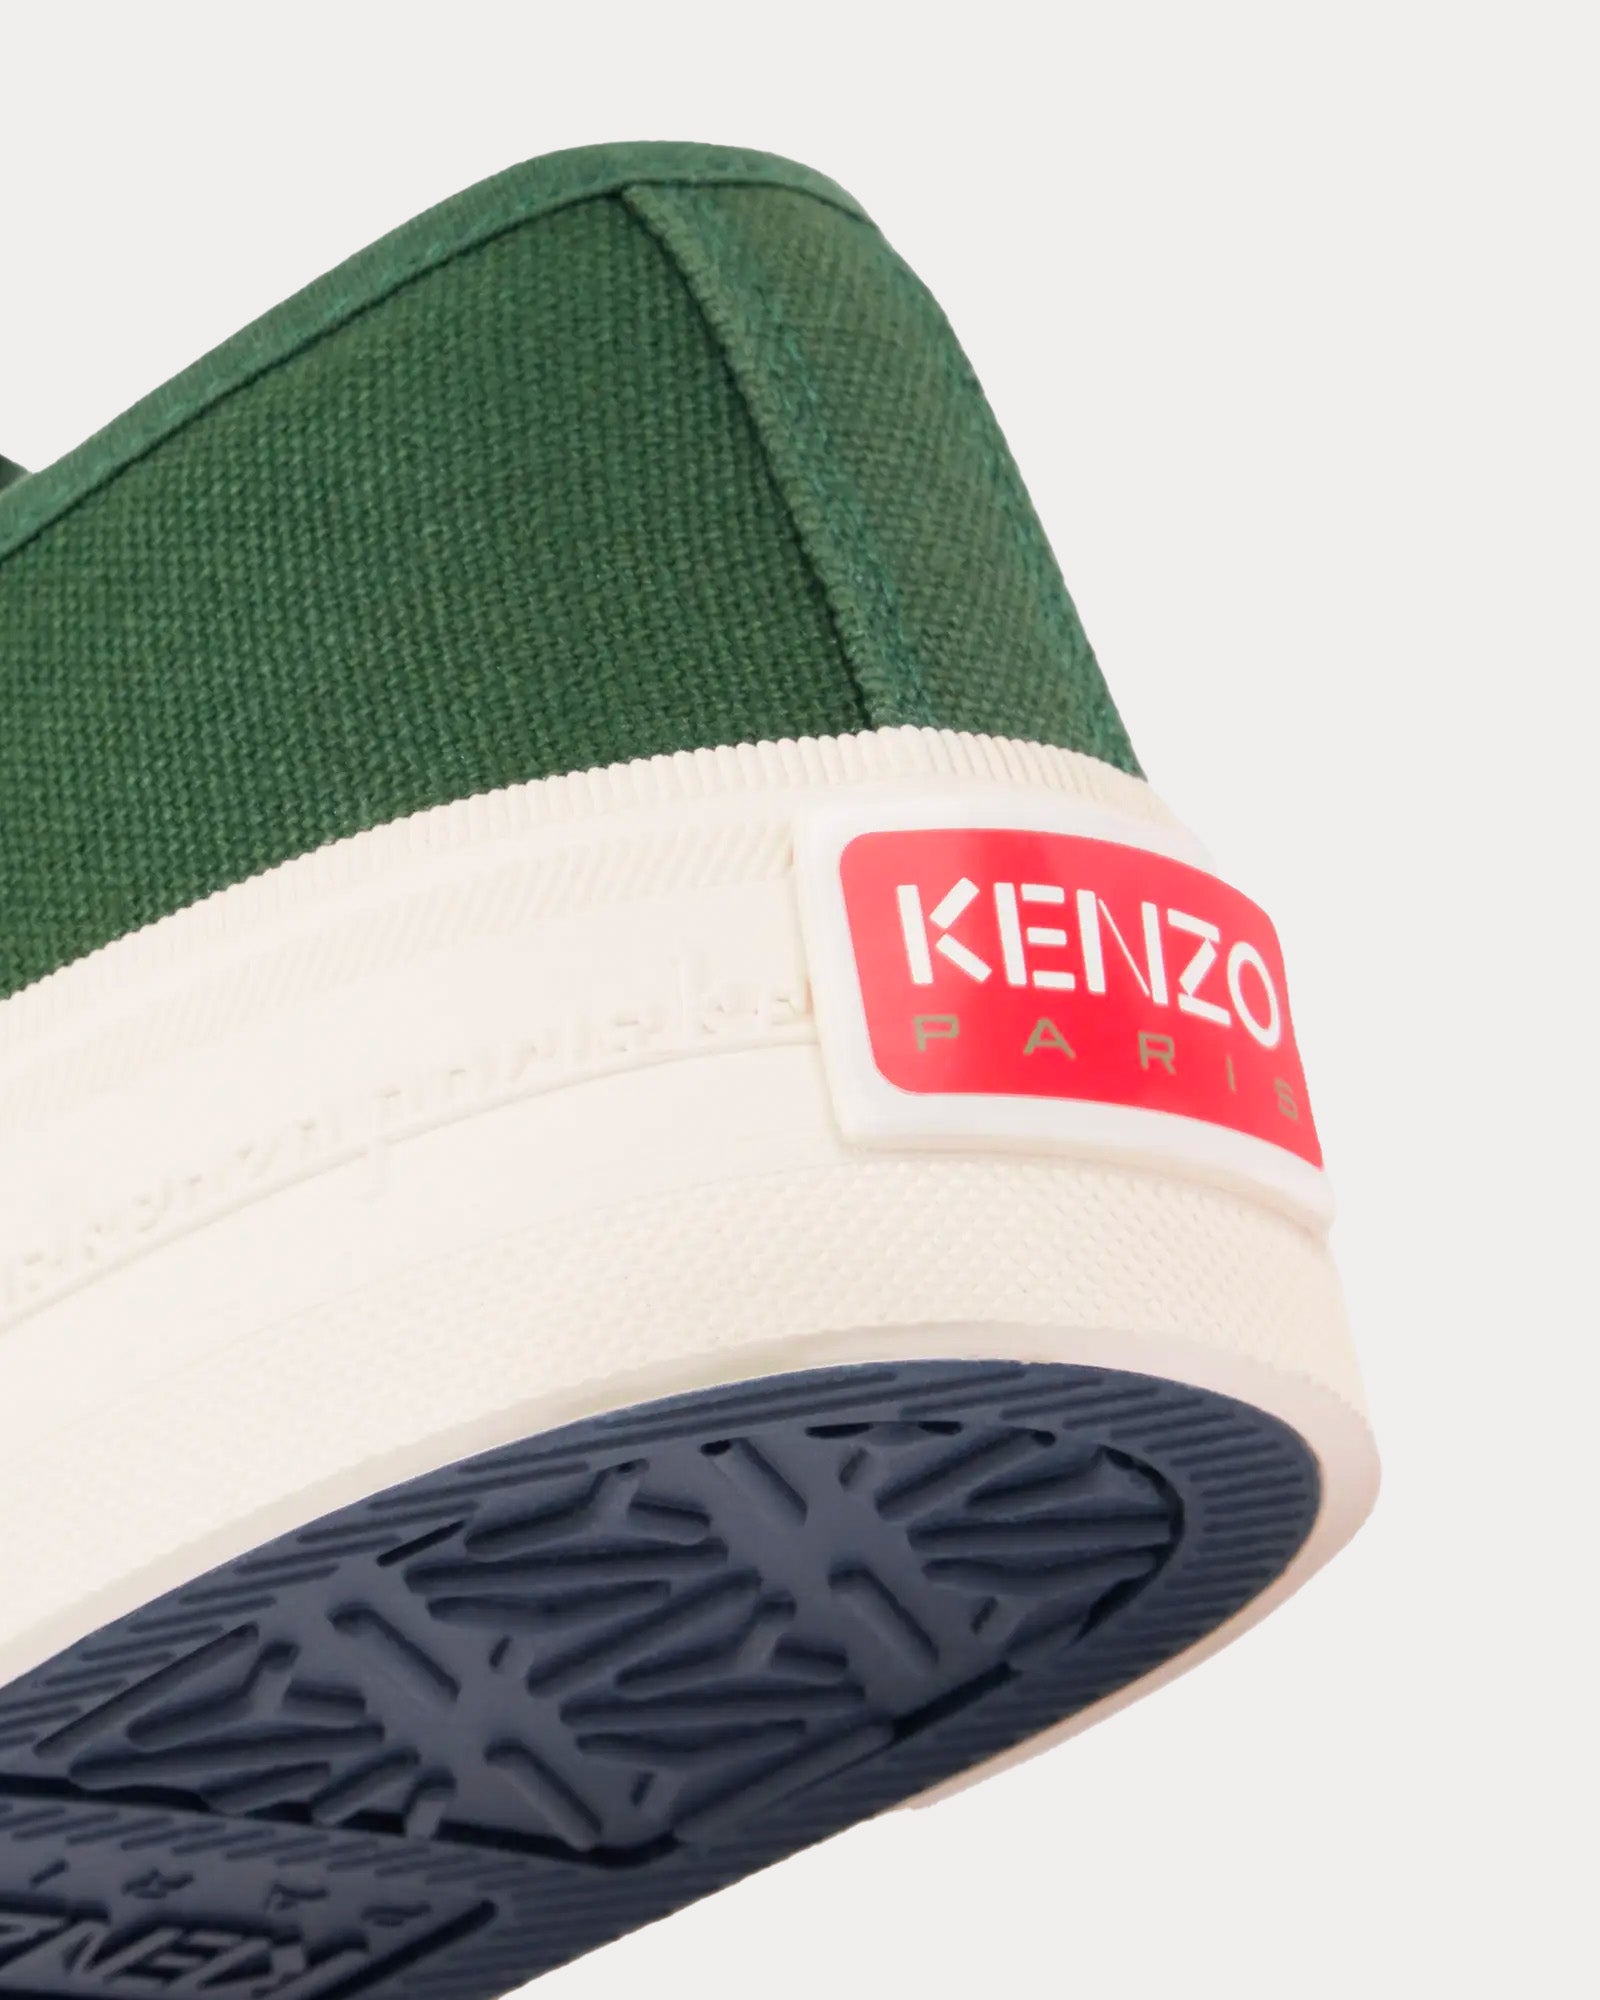 Kenzo - Kenzo Foxy Canvas Dark Khaki Low Top Sneakers